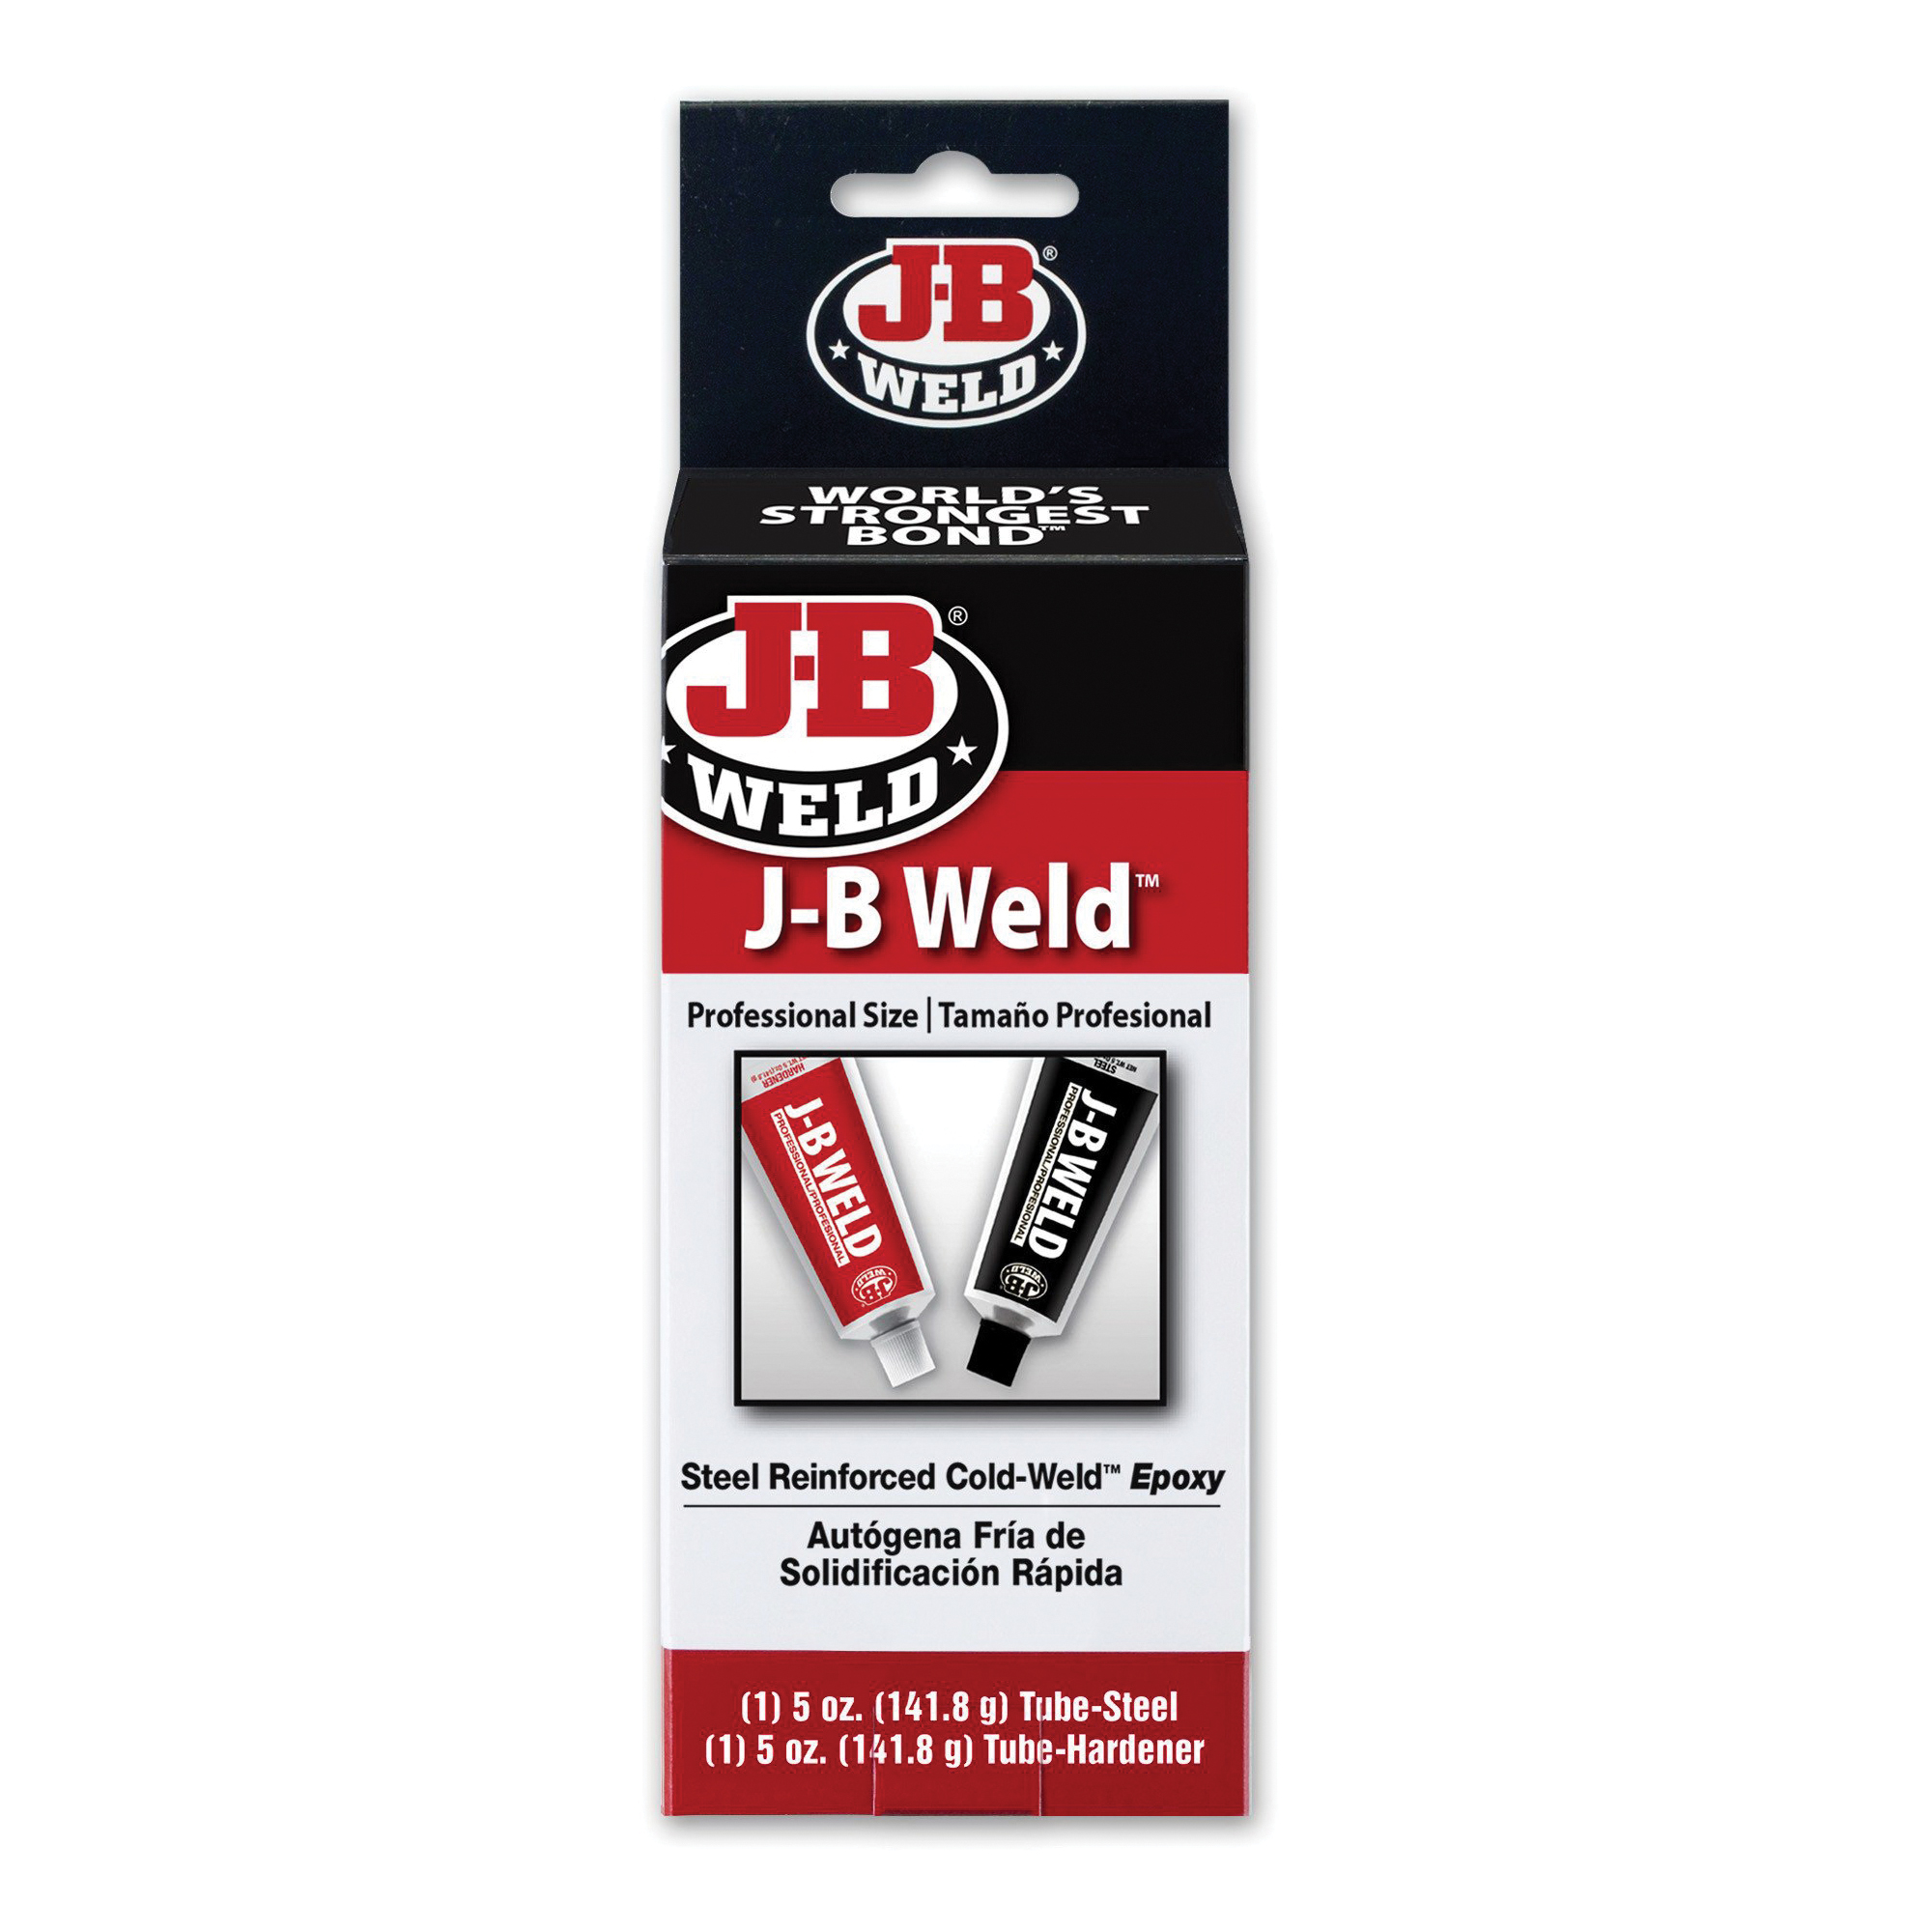 J-B Weld KWIKWELD™ 8276 2-Component Fast Bond Epoxy Adhesive, 1 oz Tube, Black/White, 4 to 6 hr Curing